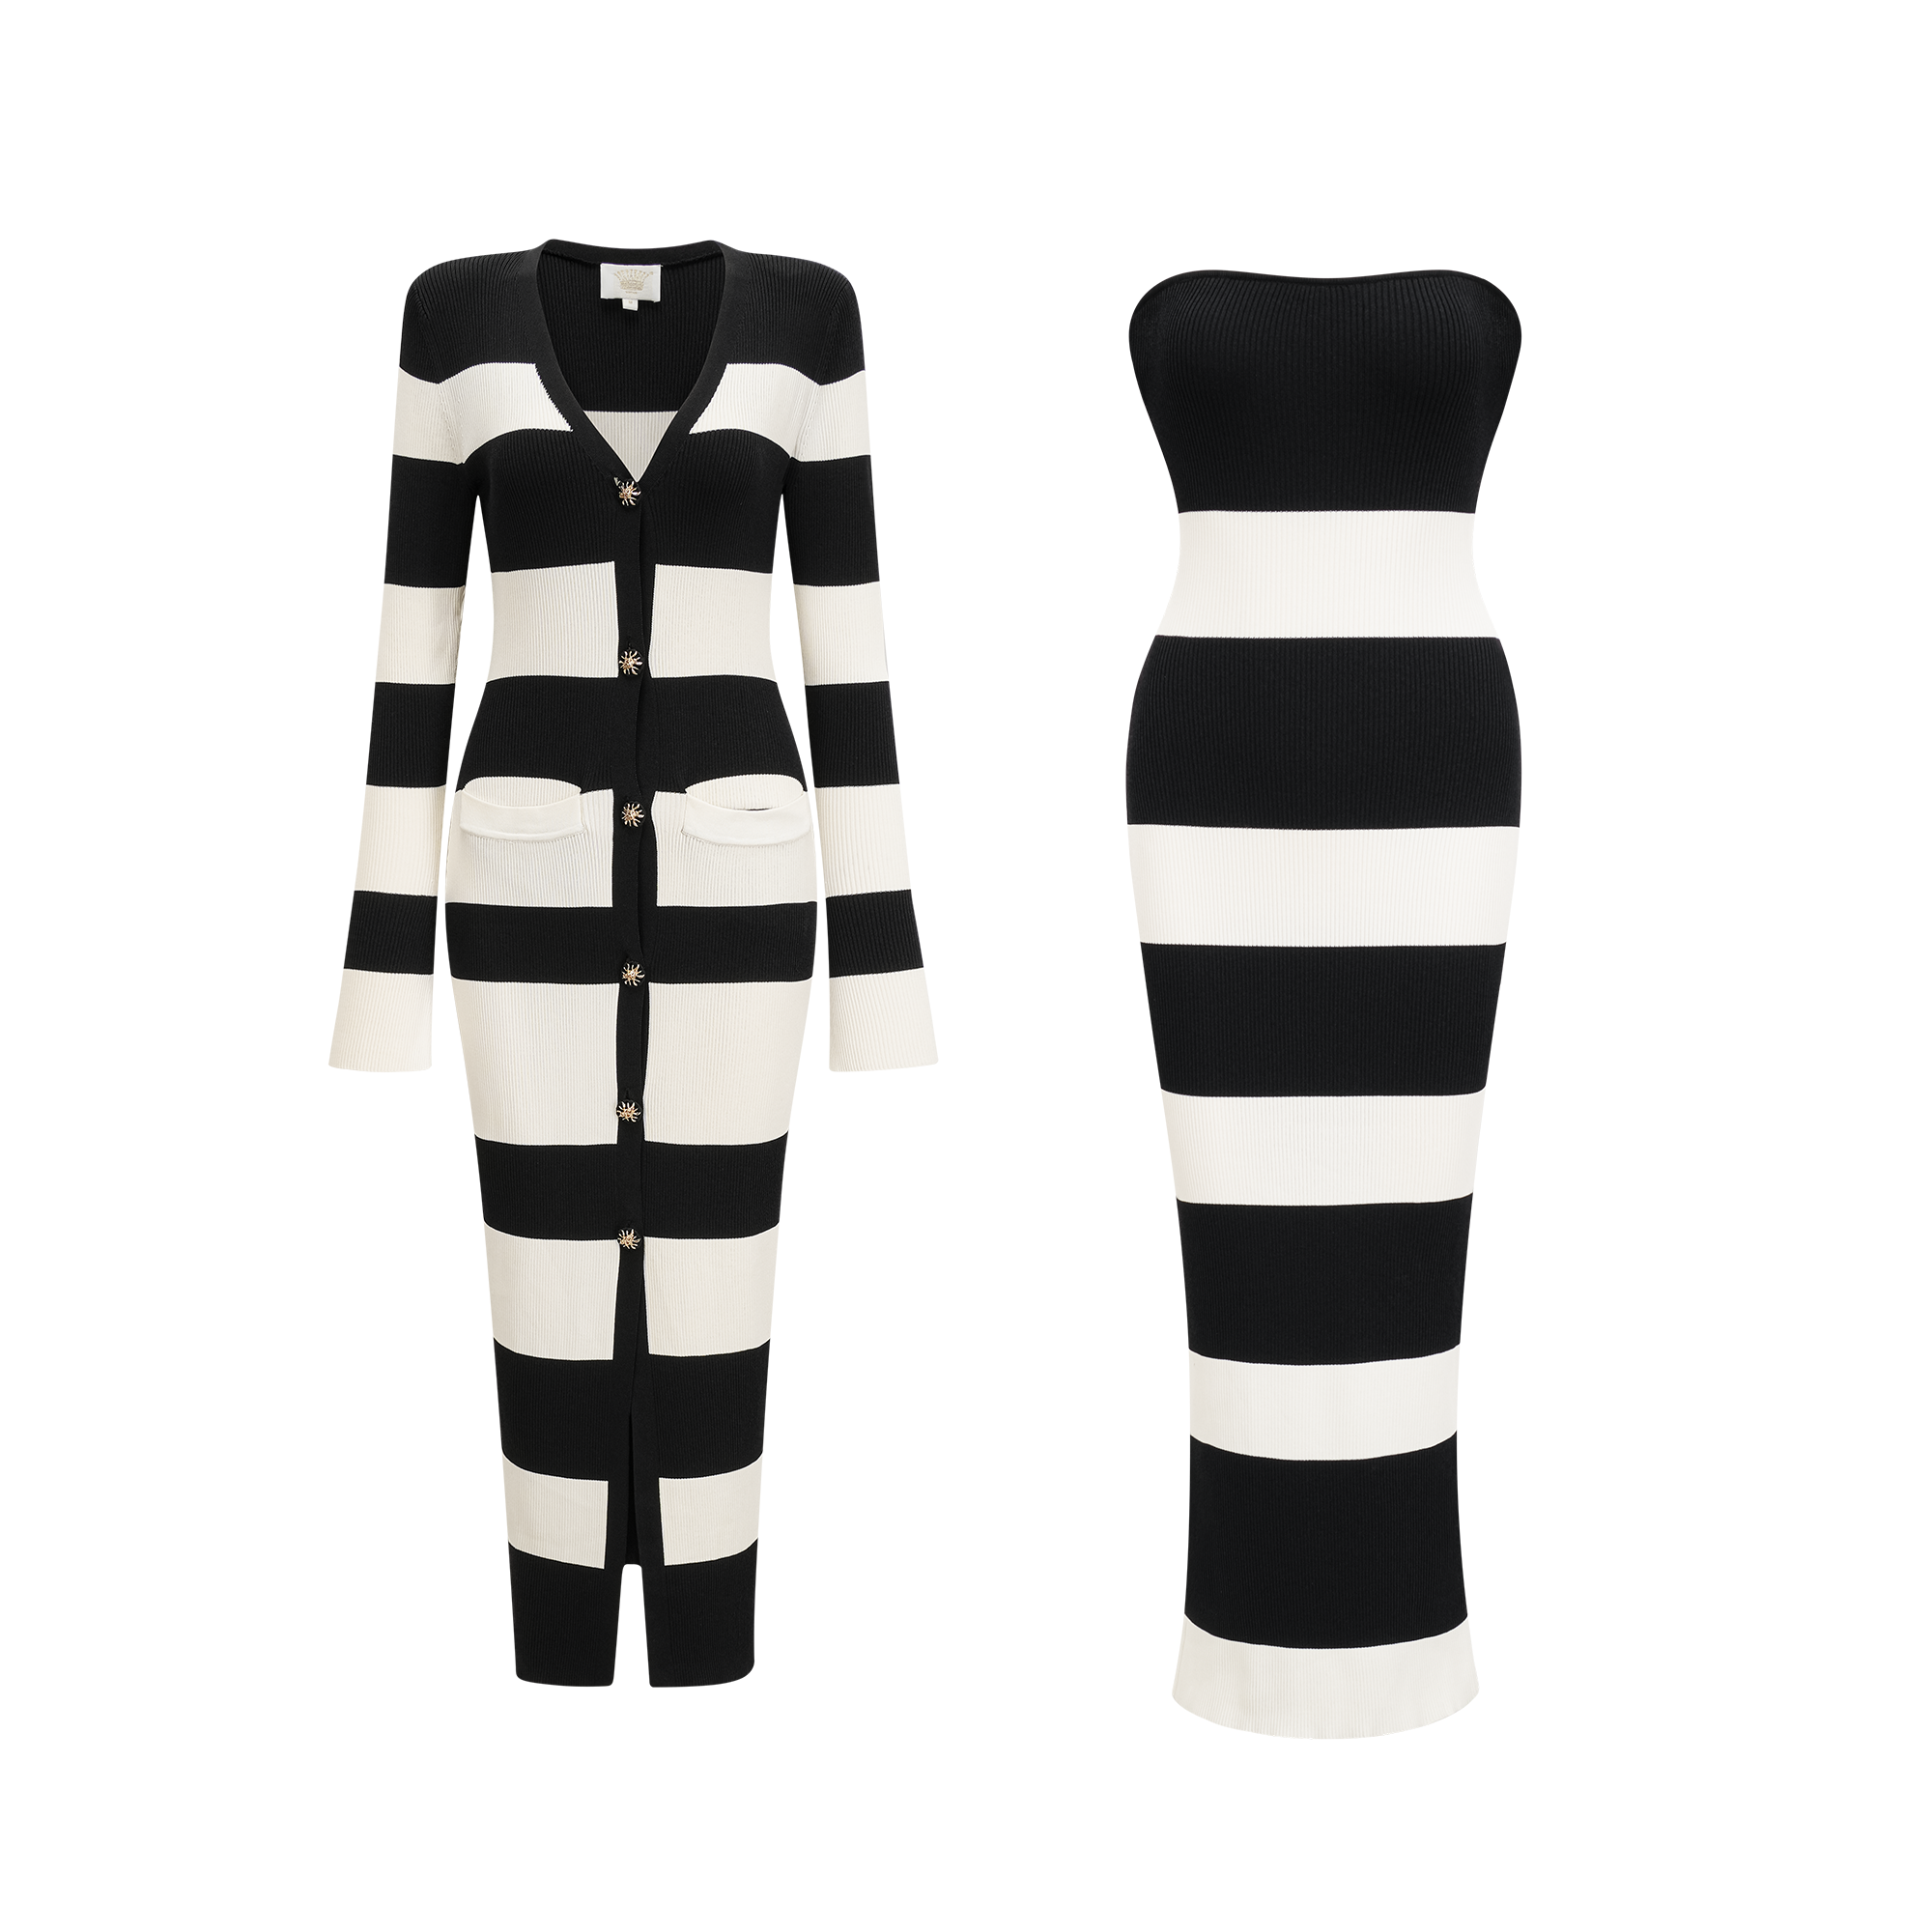 Fabienne striped long cardigan & dress matching set